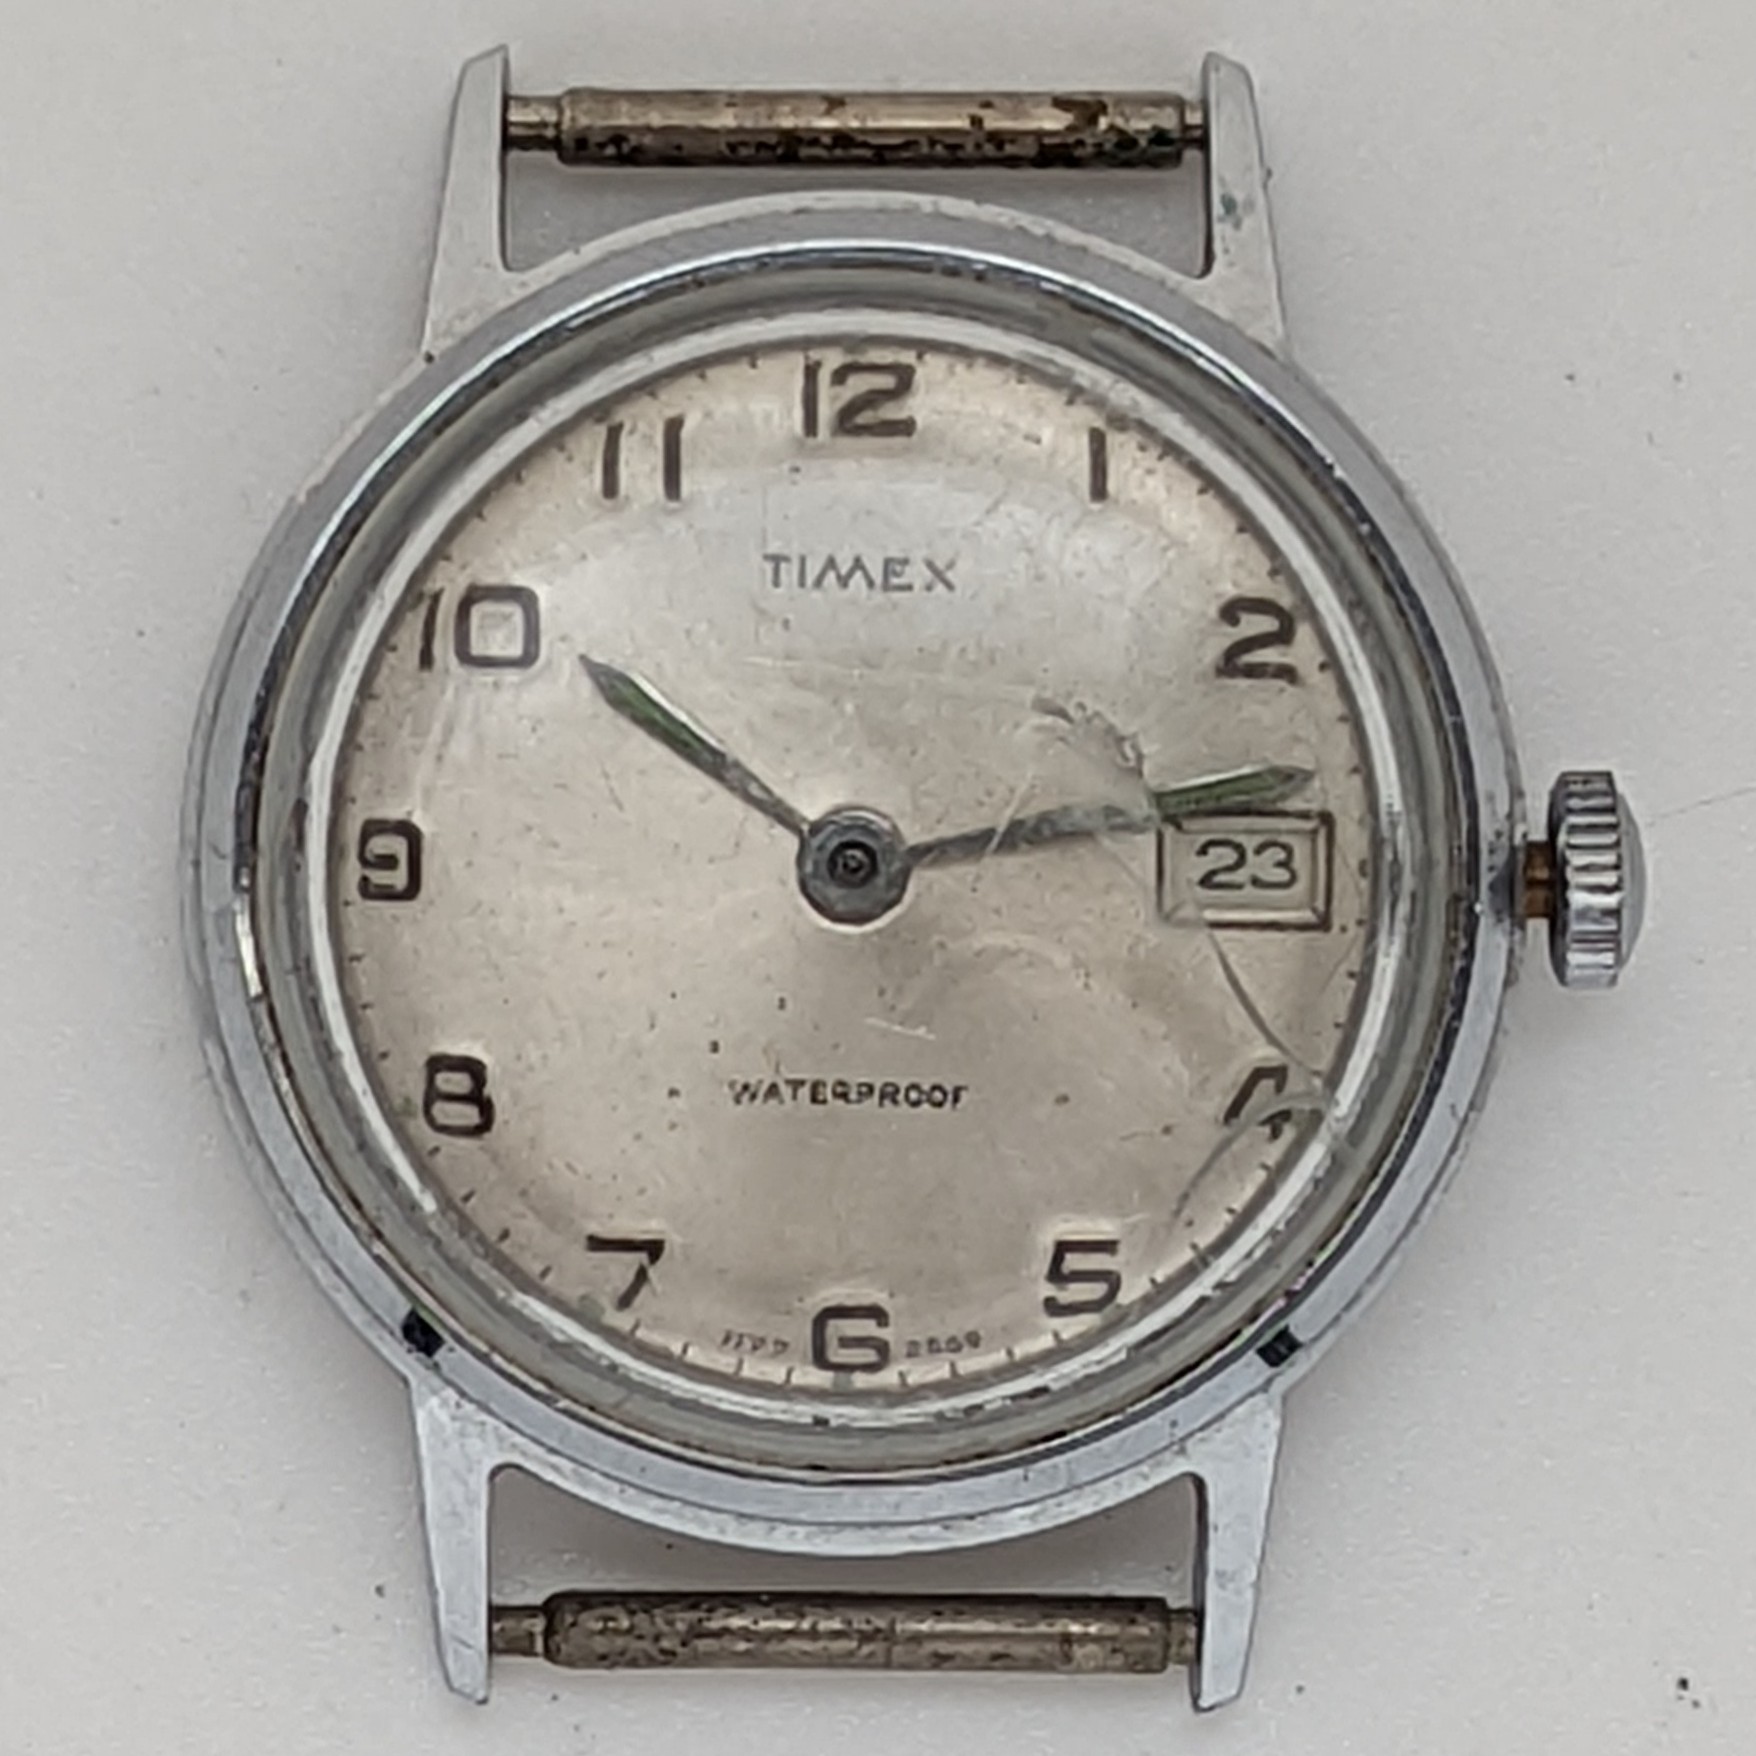 Timex Sprite 1177 2569 [1969]